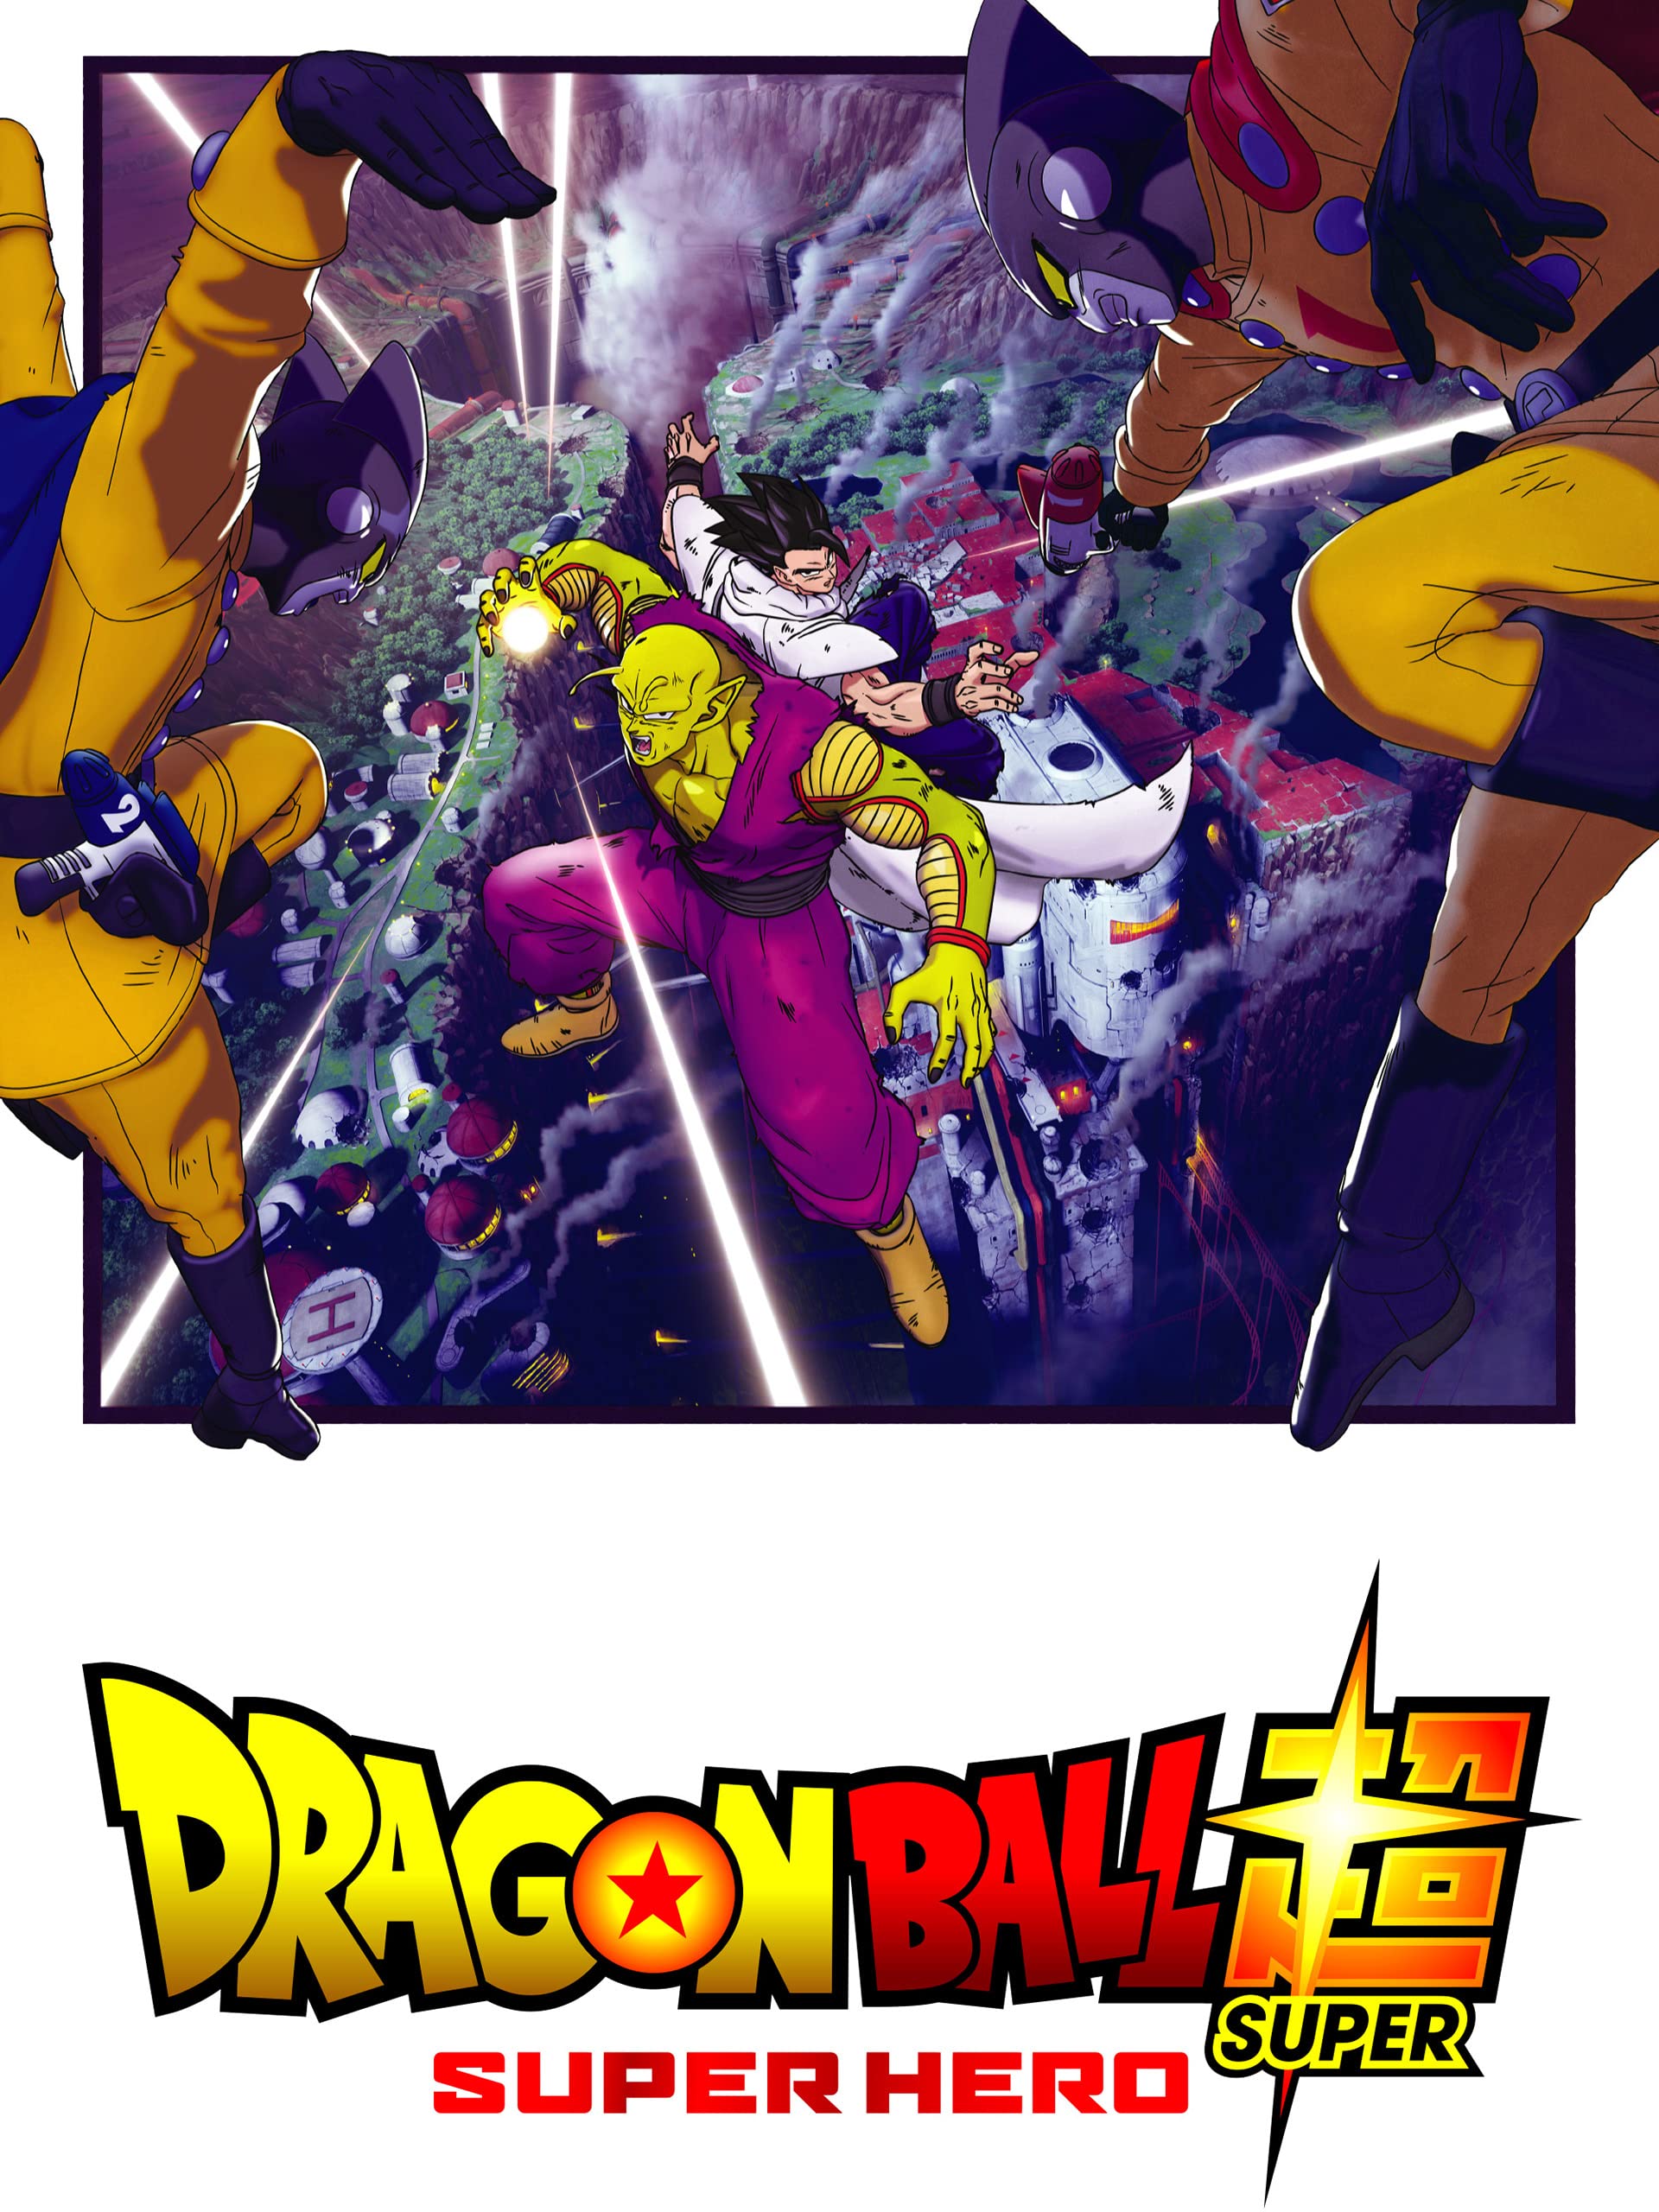 Dragon Ball Super: Super Hero: Original Japanese Version (Digital HD Film) $2.99